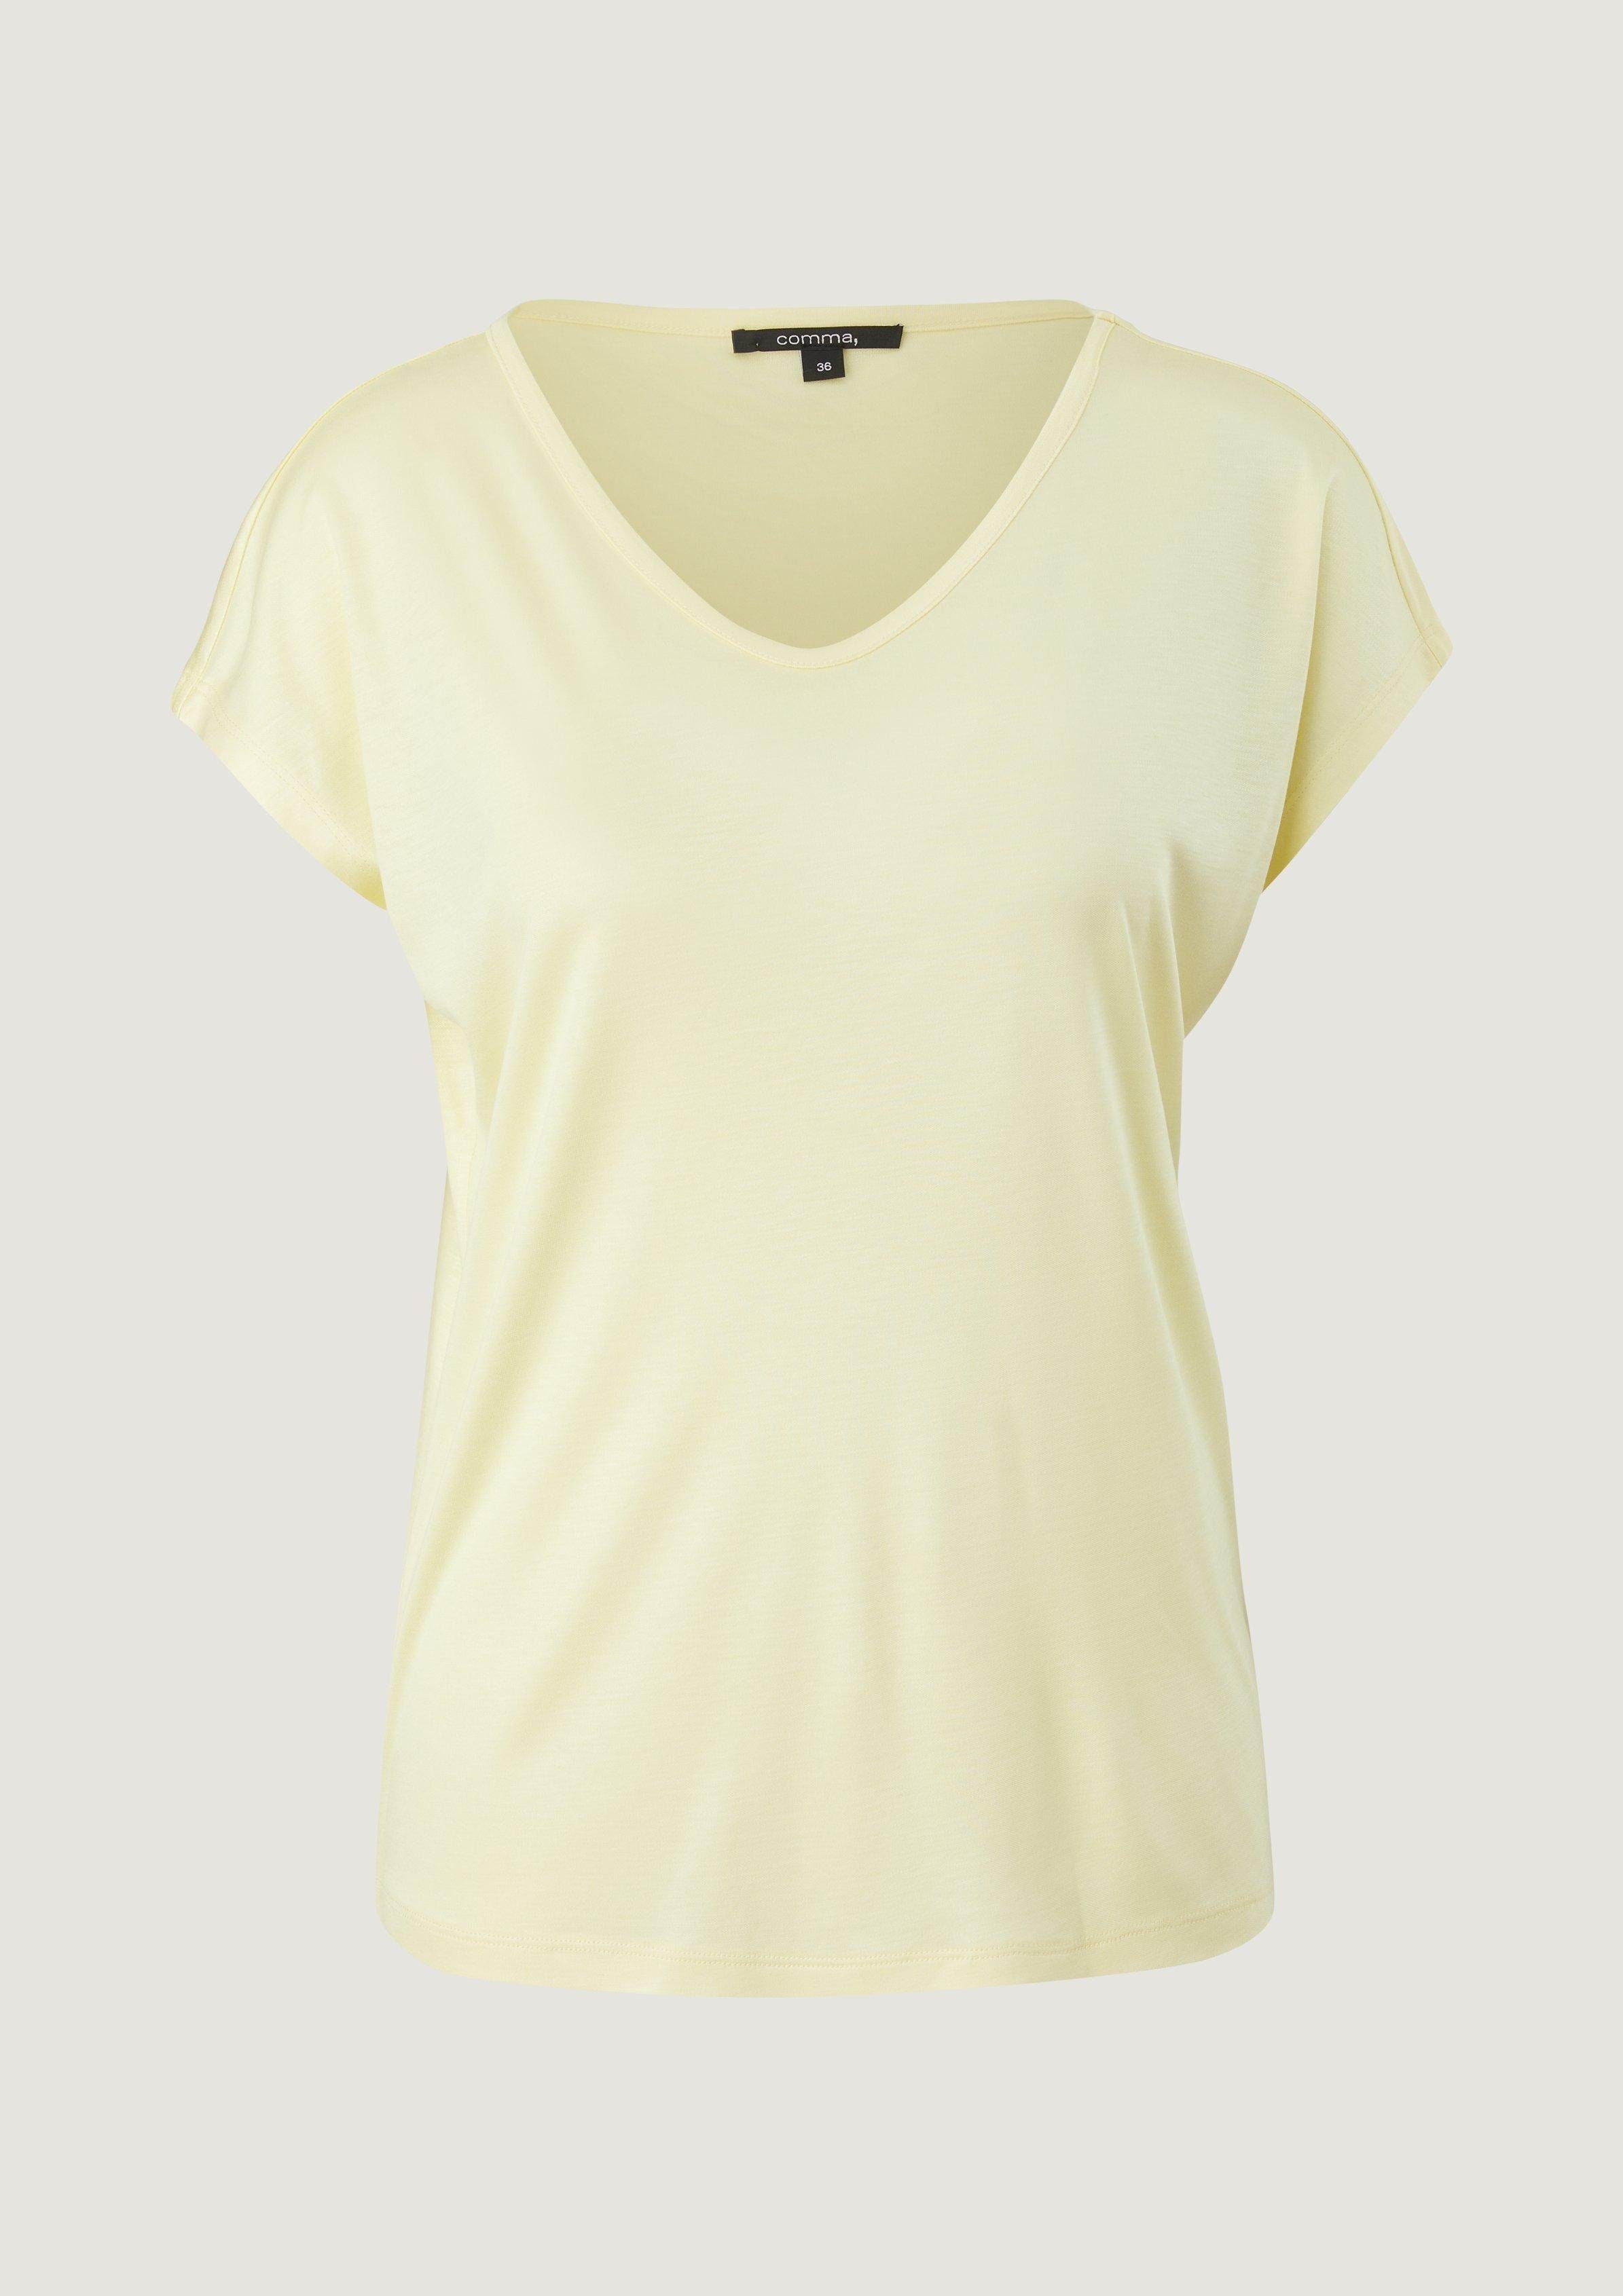 Comma Kurzarmshirt T-Shirt aus helles zitrone Stickerei satiniertem Jersey